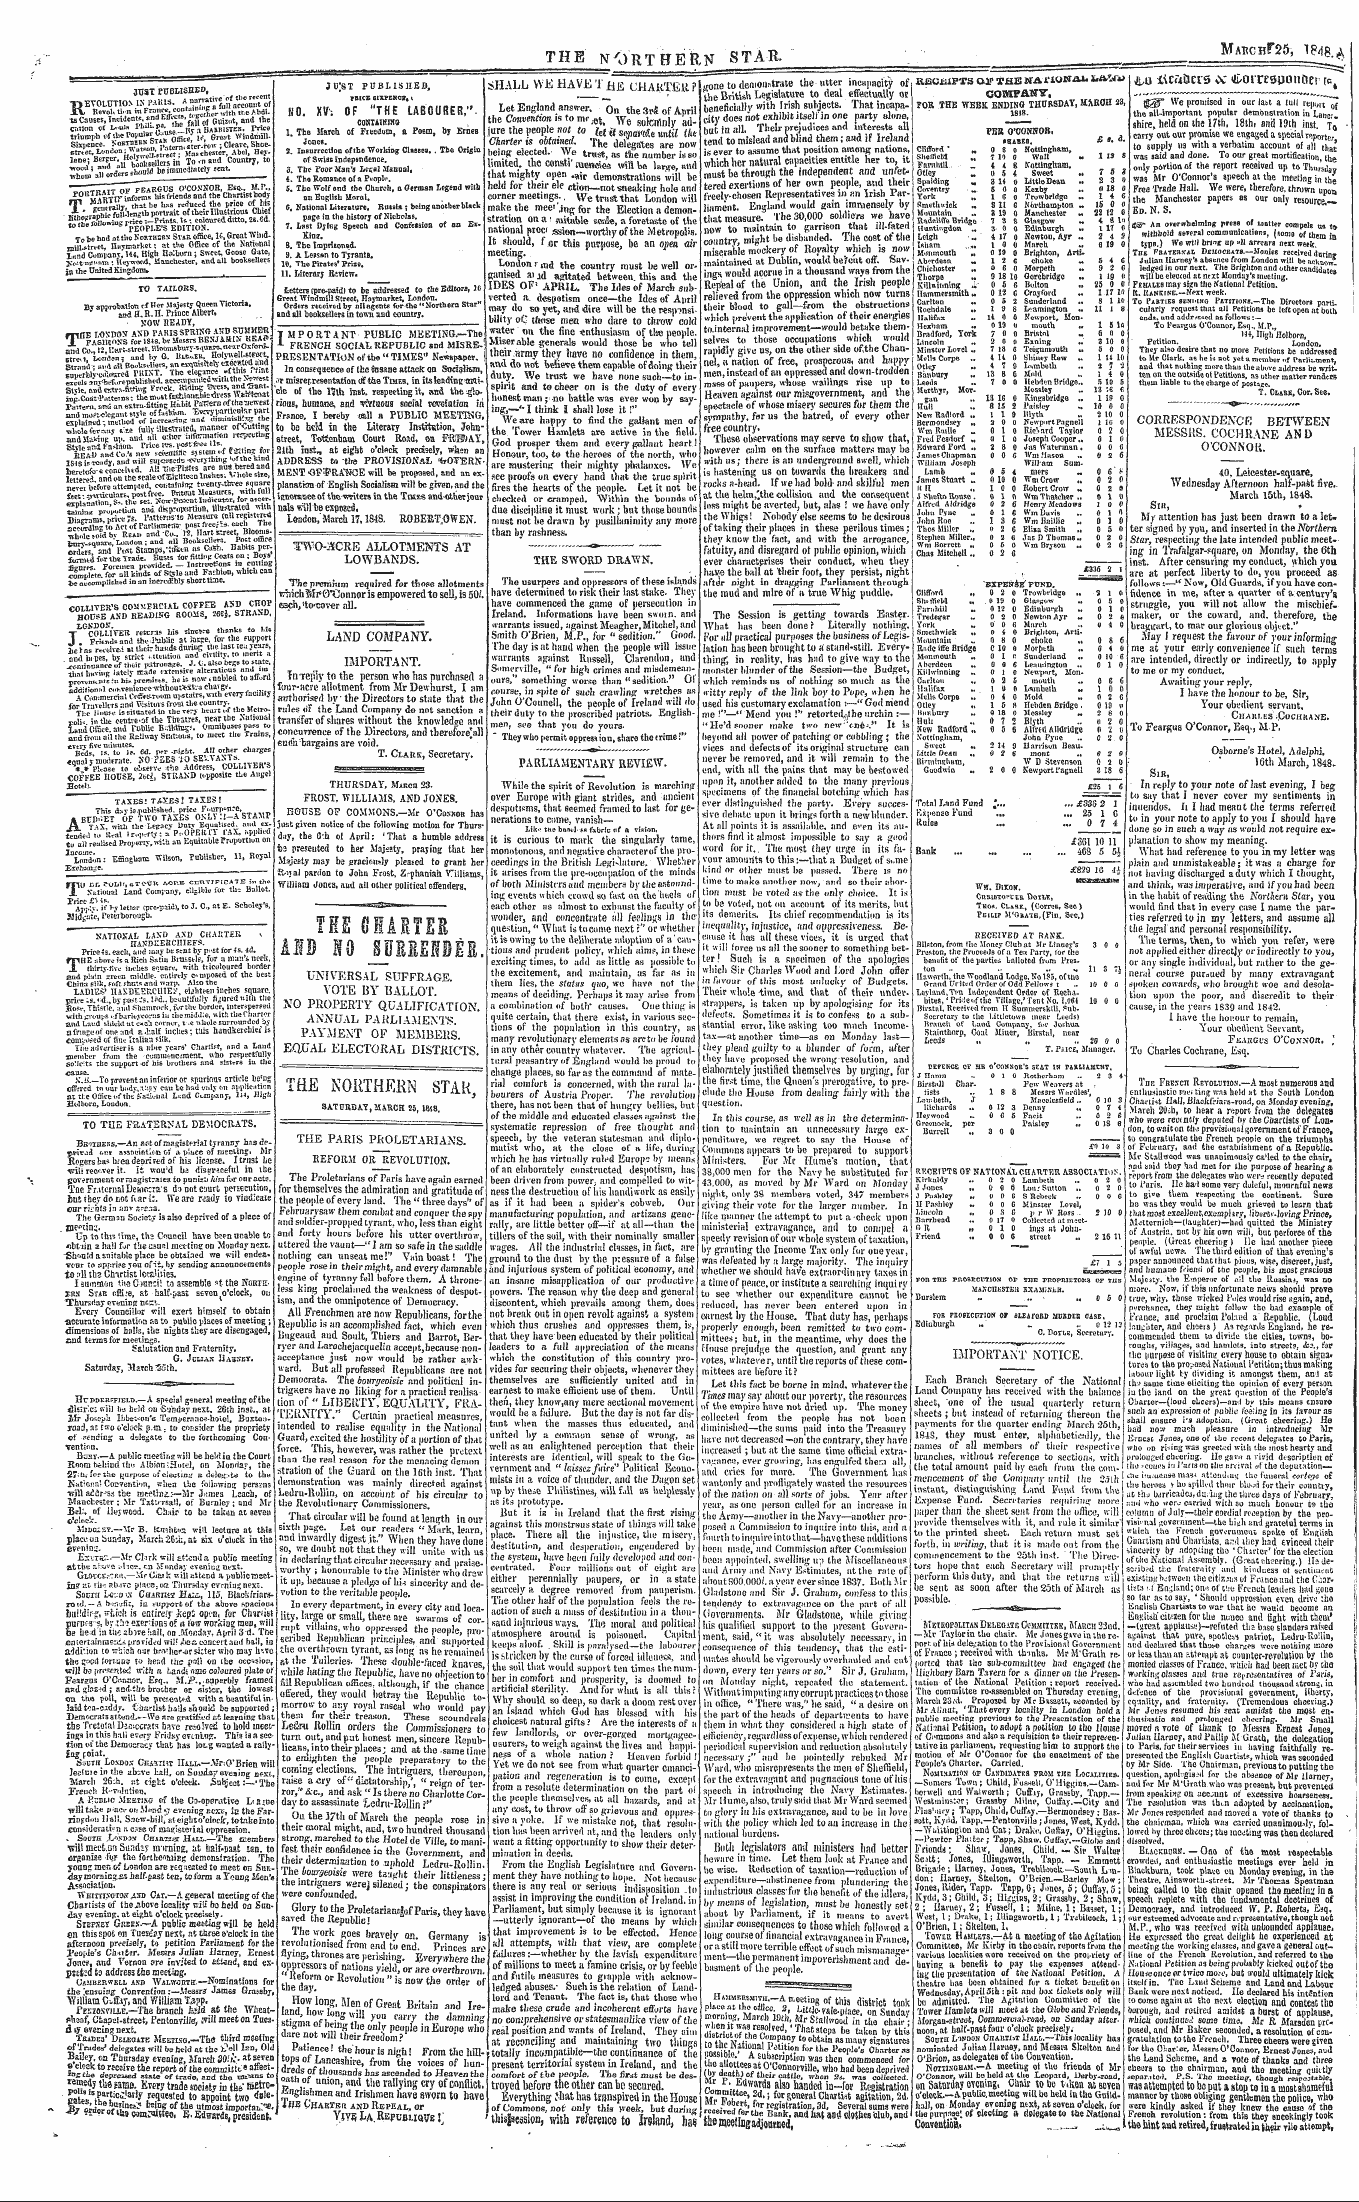 Northern Star (1837-1852): jS F Y, 3rd edition - Ad00412